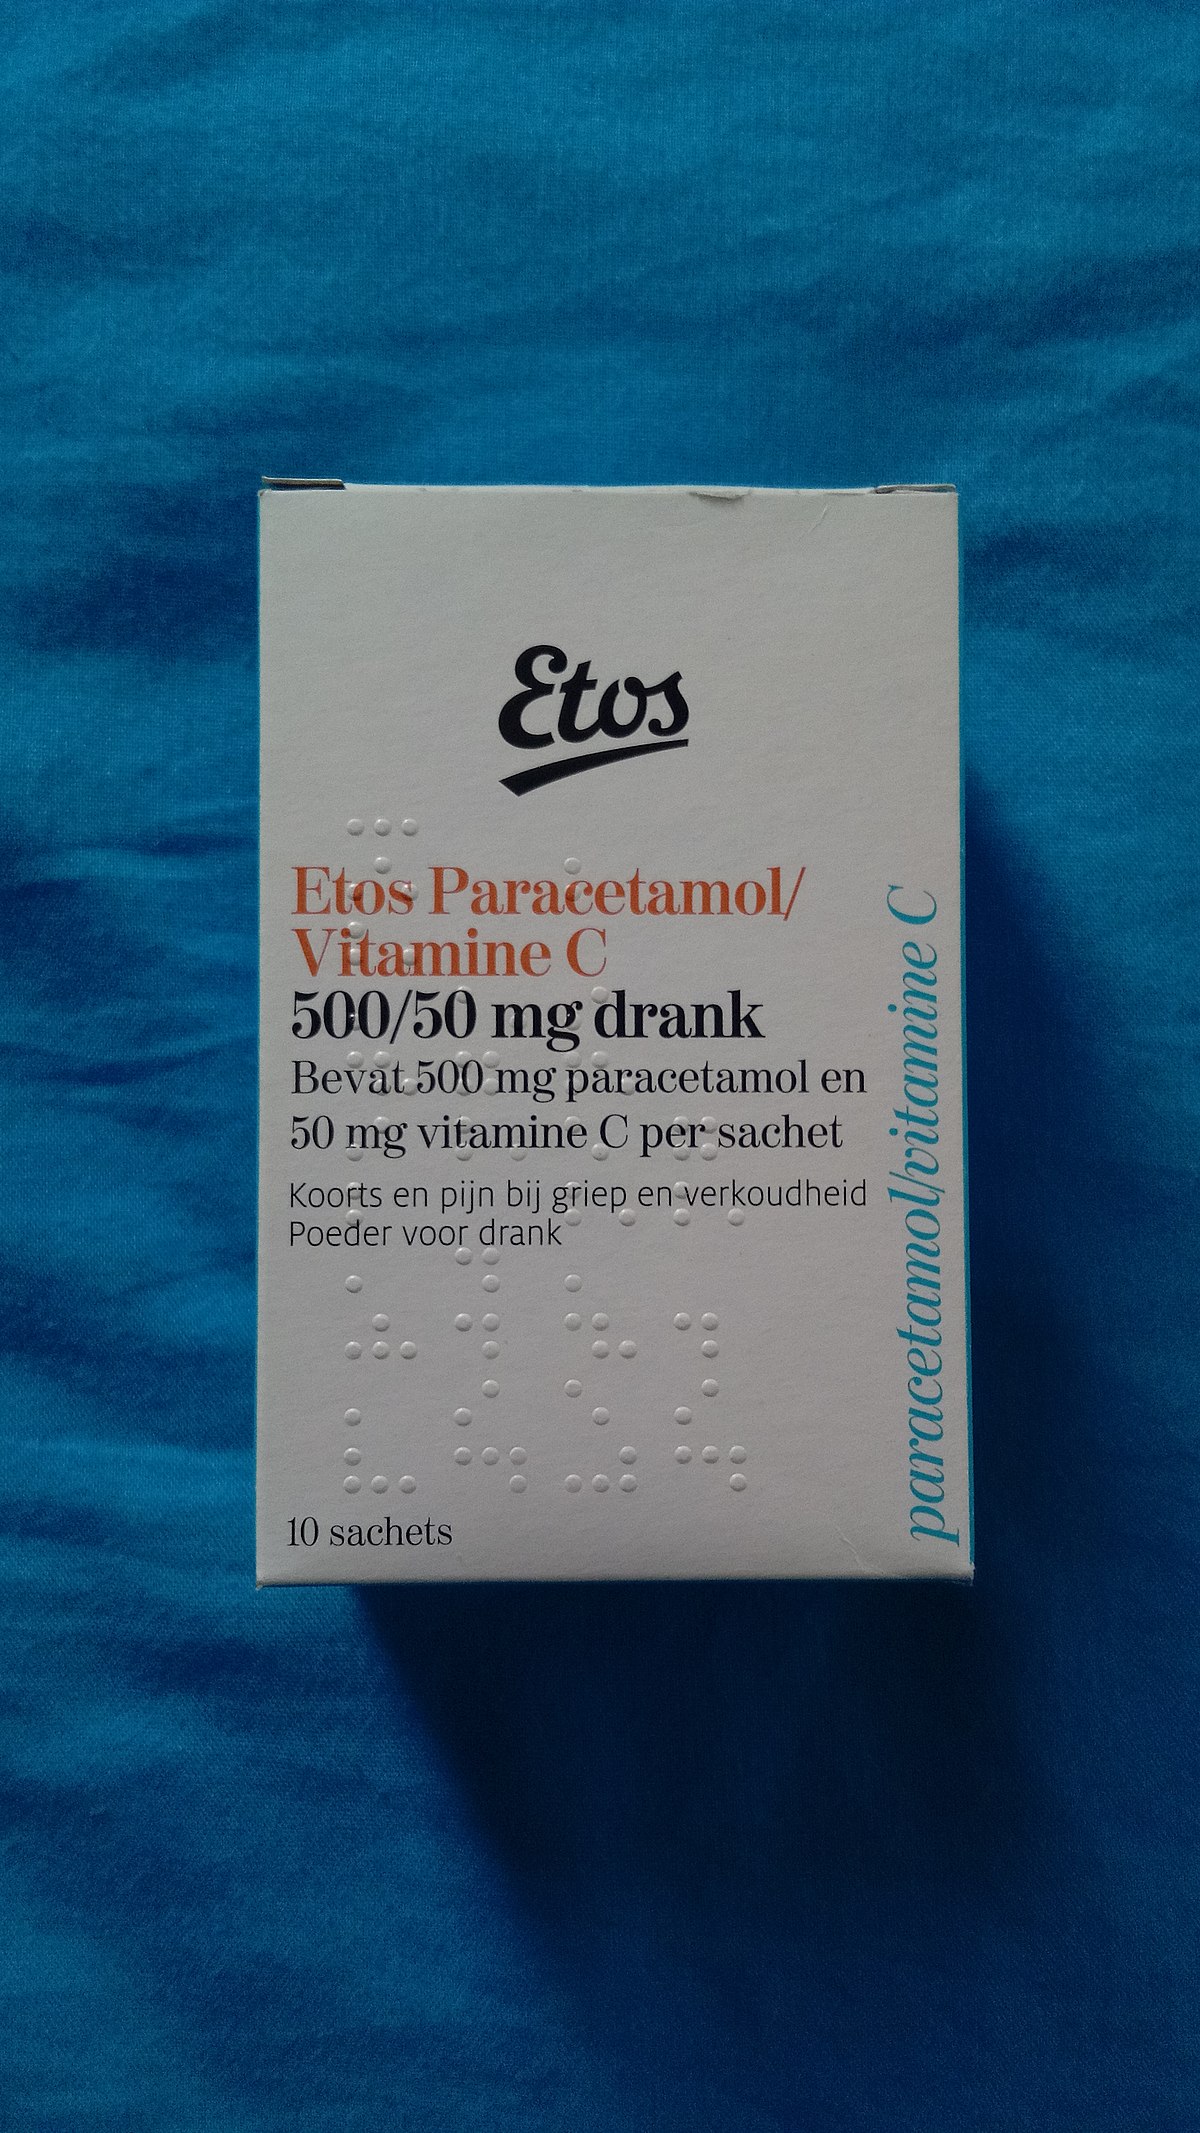 gastvrouw Ik geloof Hymne File:Etos Paracetamol - Vitamine C, Winschoten (2019) 01.jpg - Wikimedia  Commons